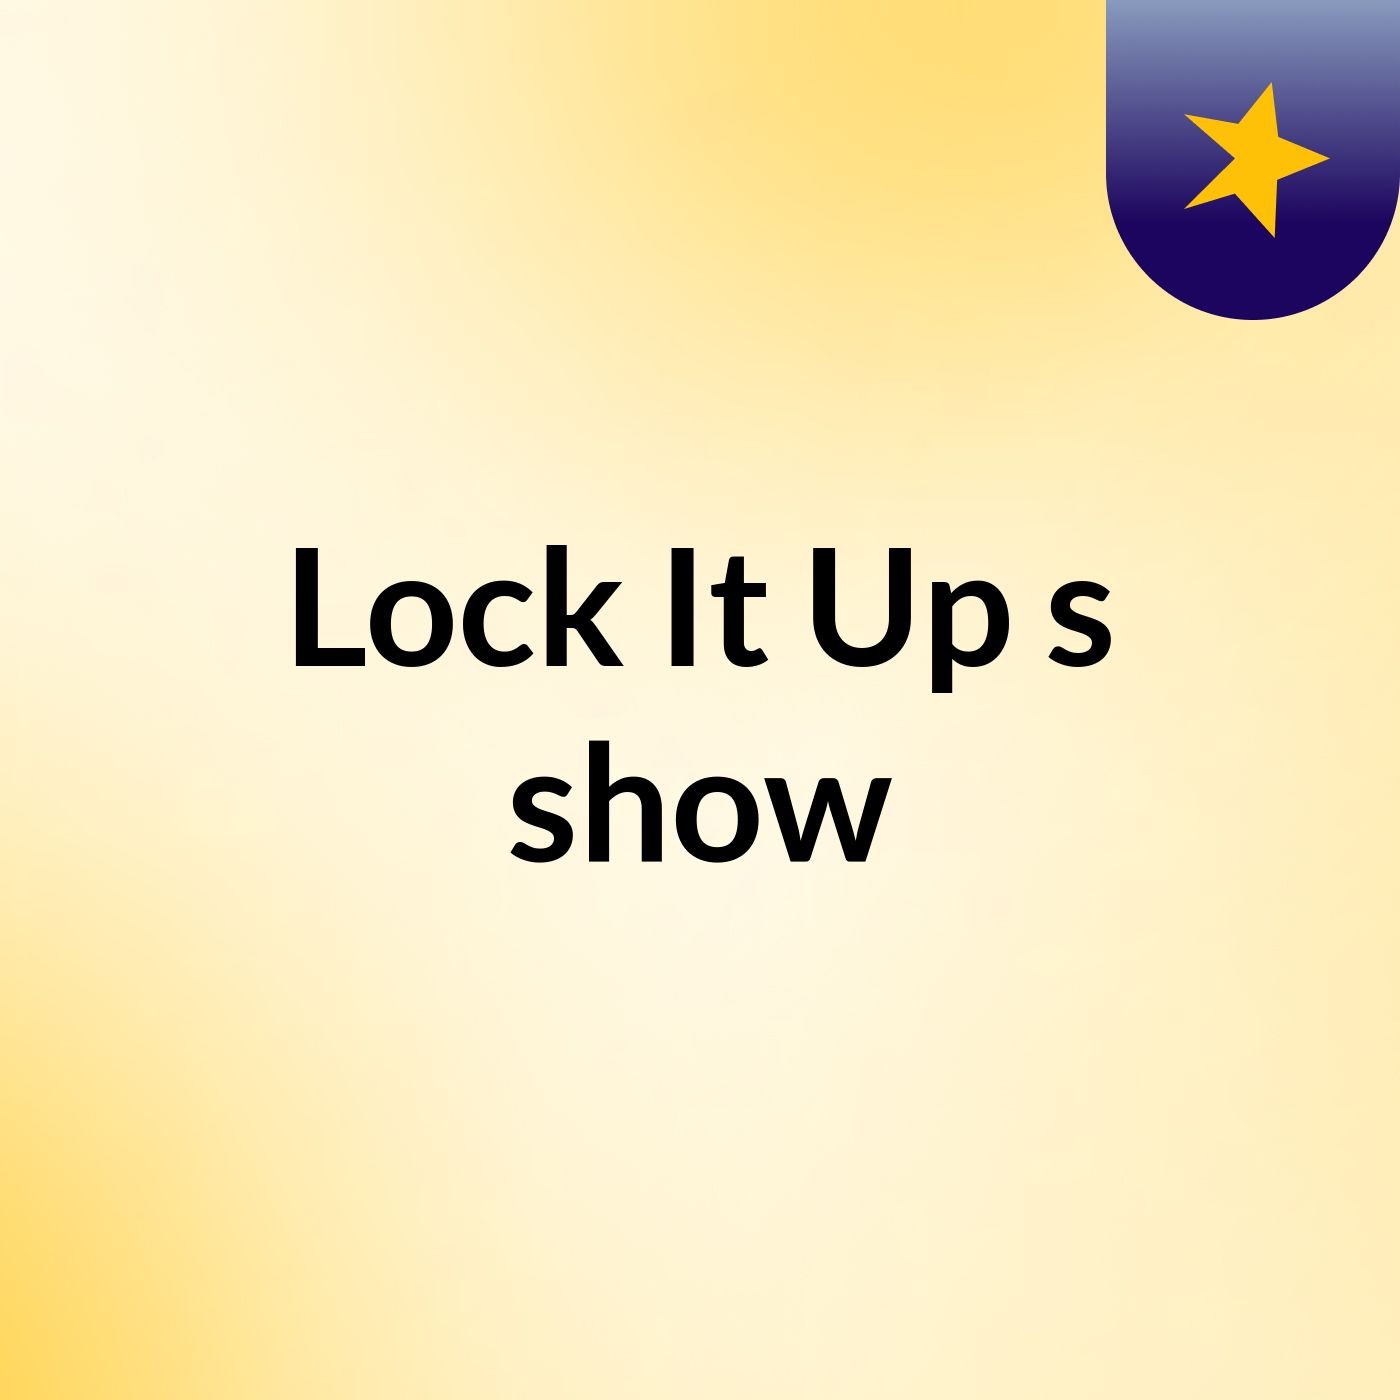 Lock It Up's show